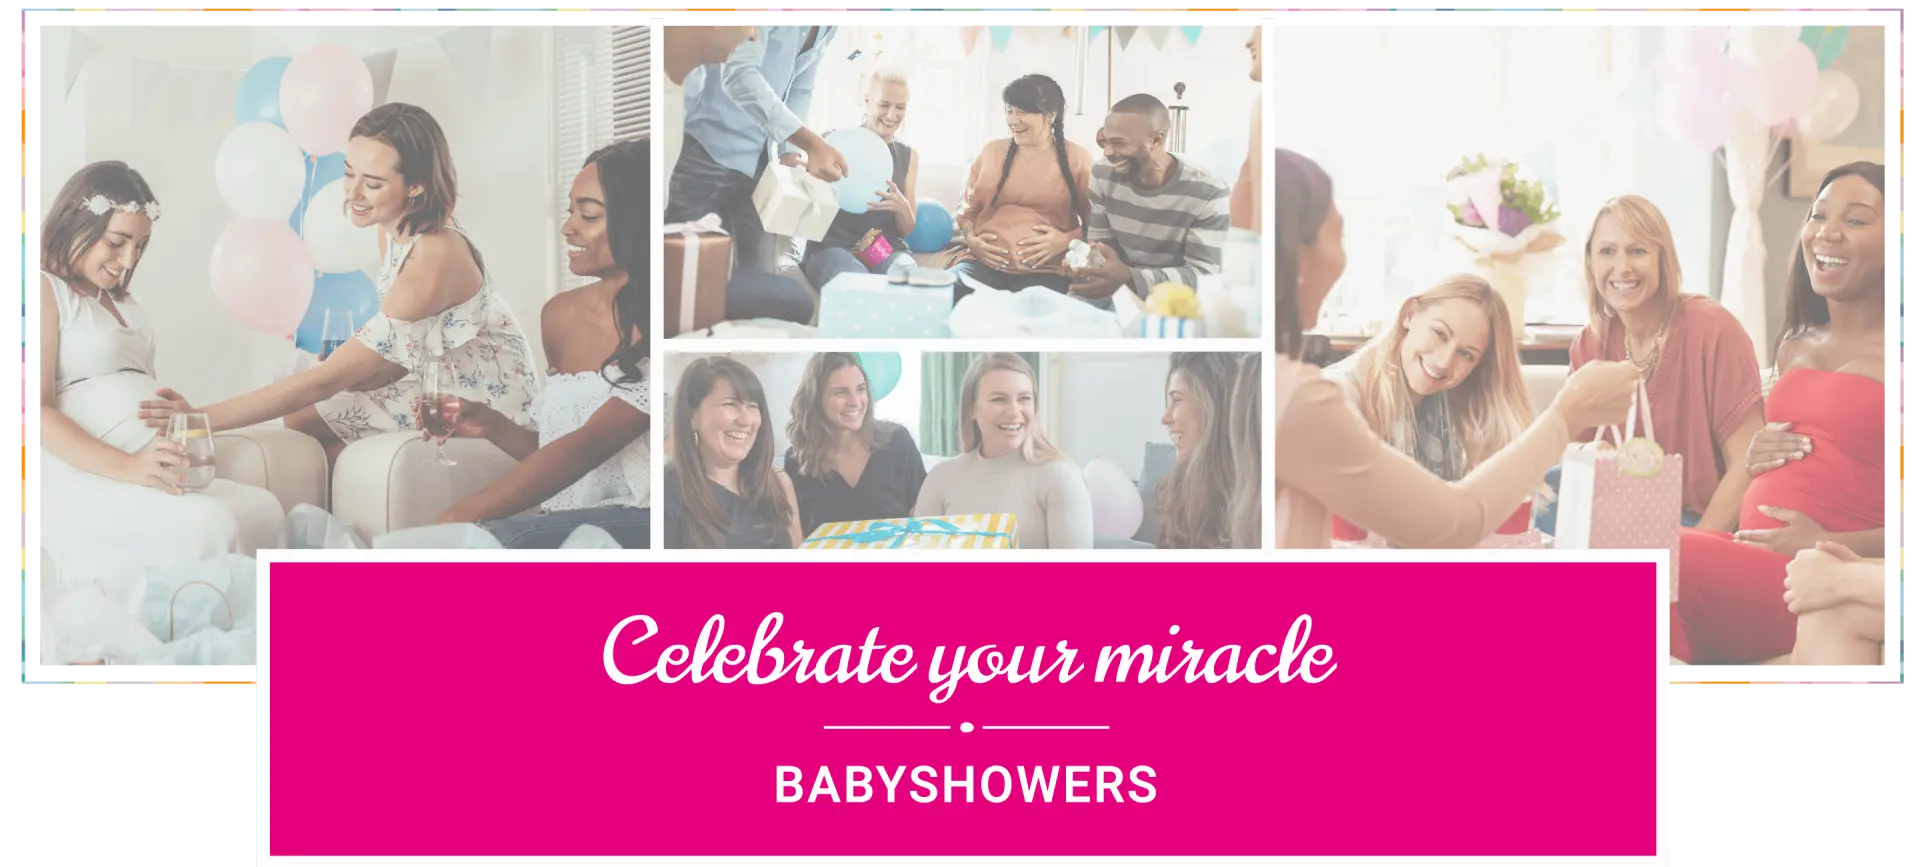 B2B banner vanparys babyshowers mobile